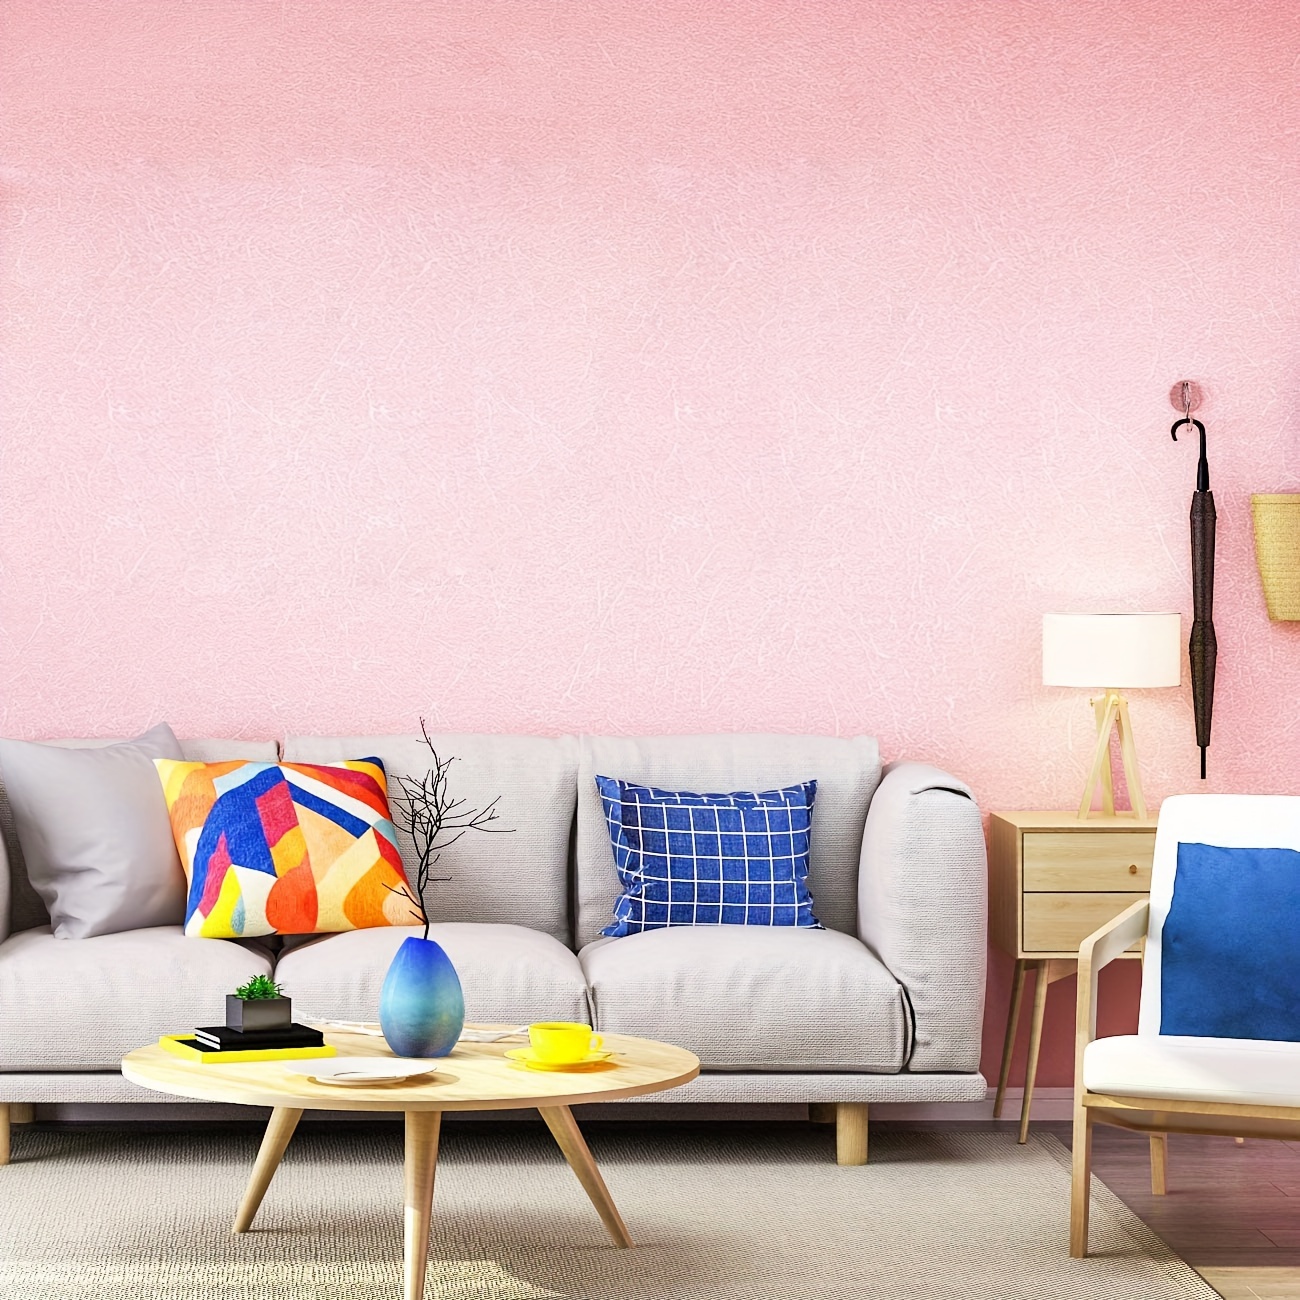 Light Pink Glitter Wallpaper Peel And Stick Glitter Contact Paper